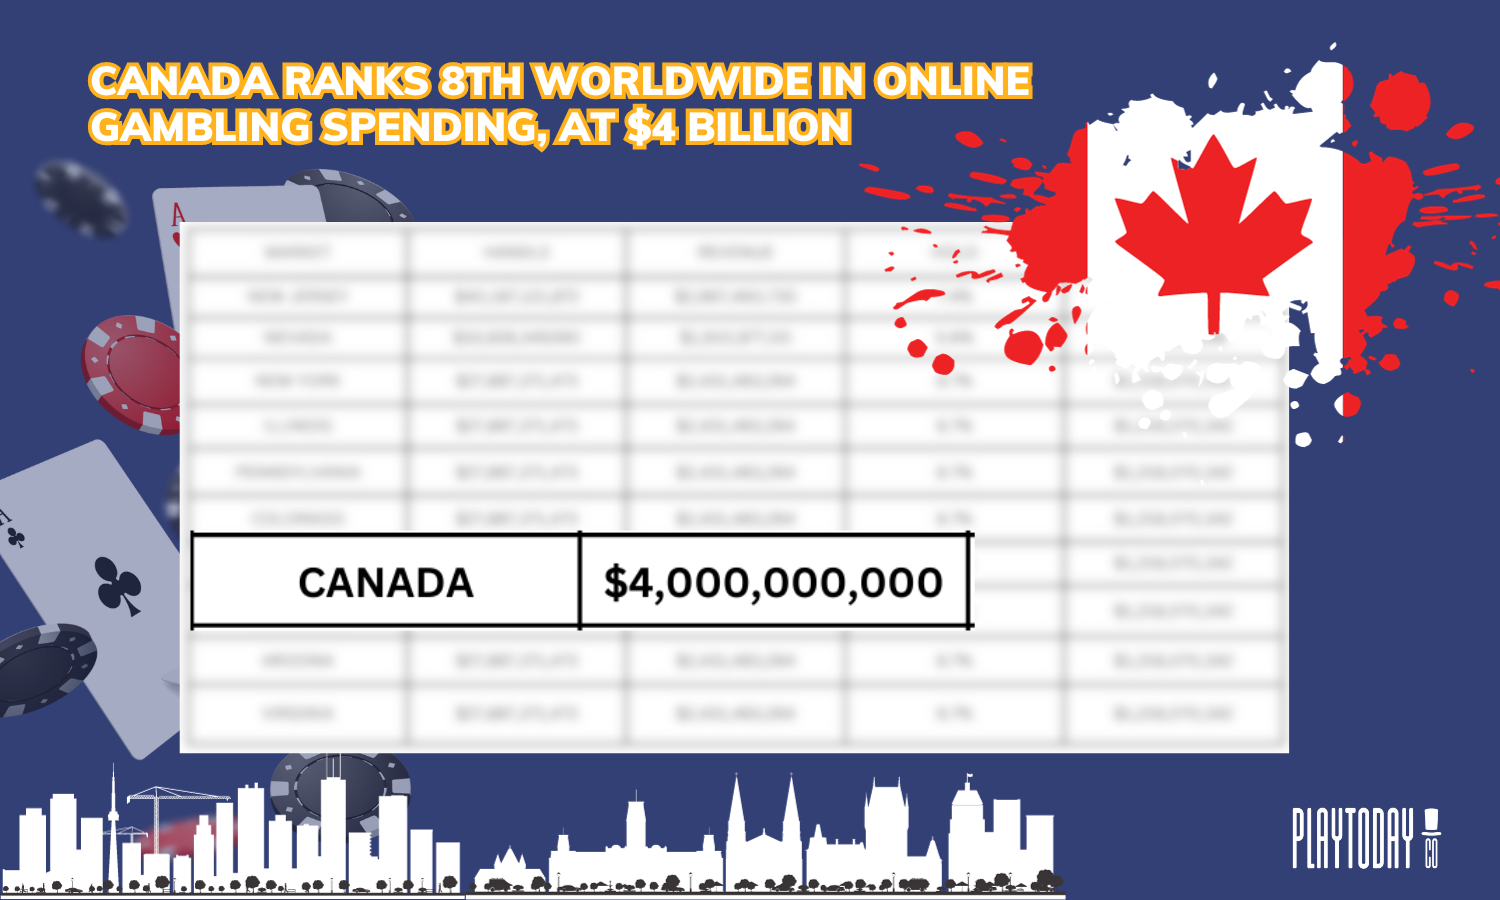 Canada Online Gambling Spending Rankings